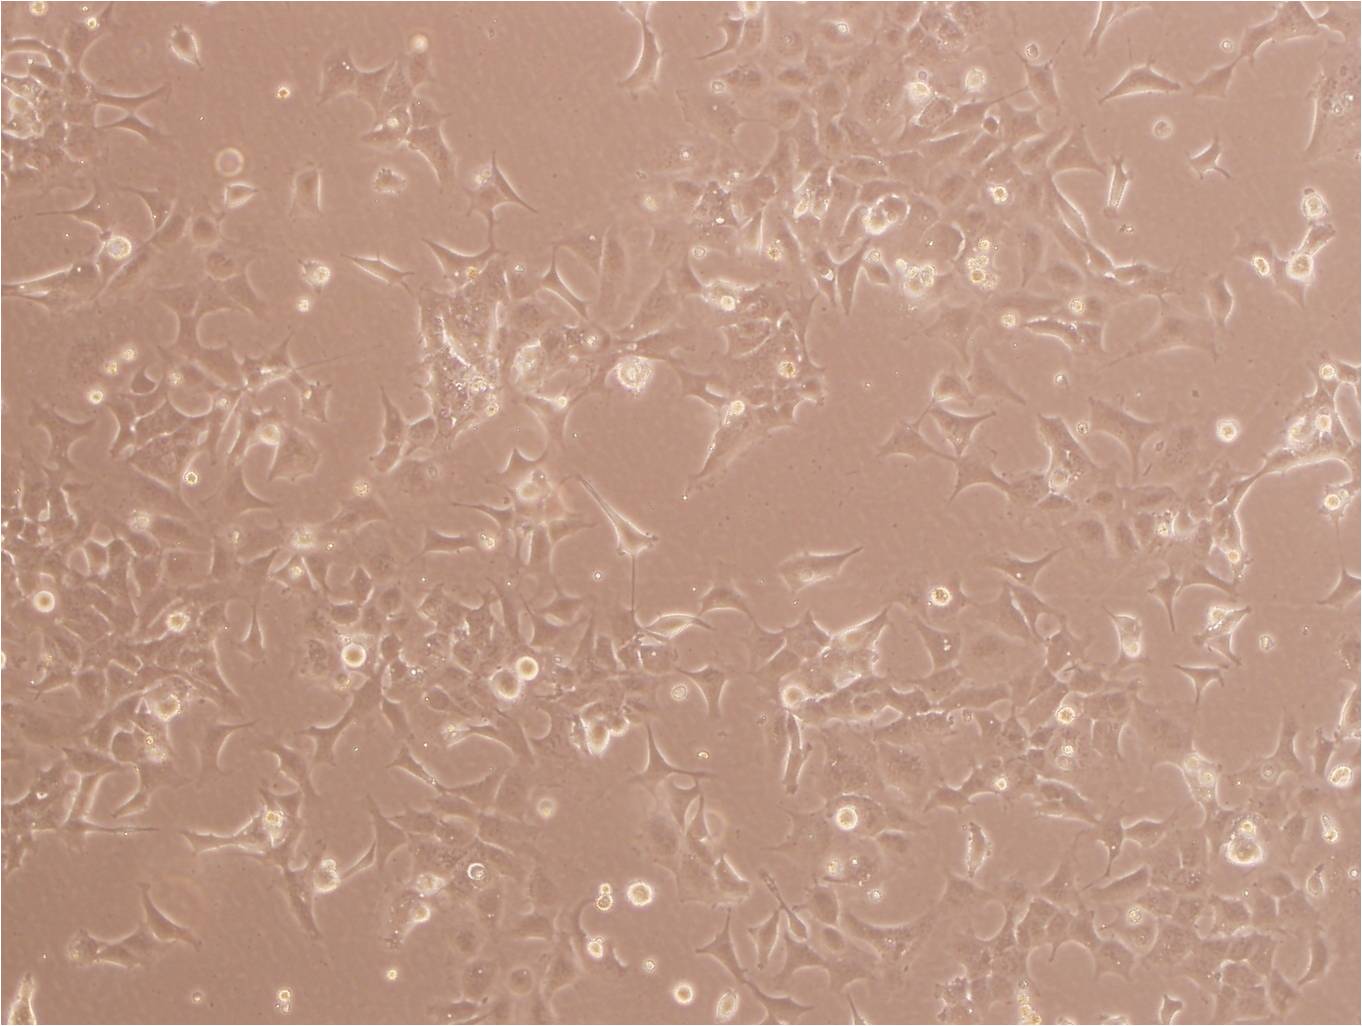 FRTL-5 Cell:大鼠甲状腺细胞系